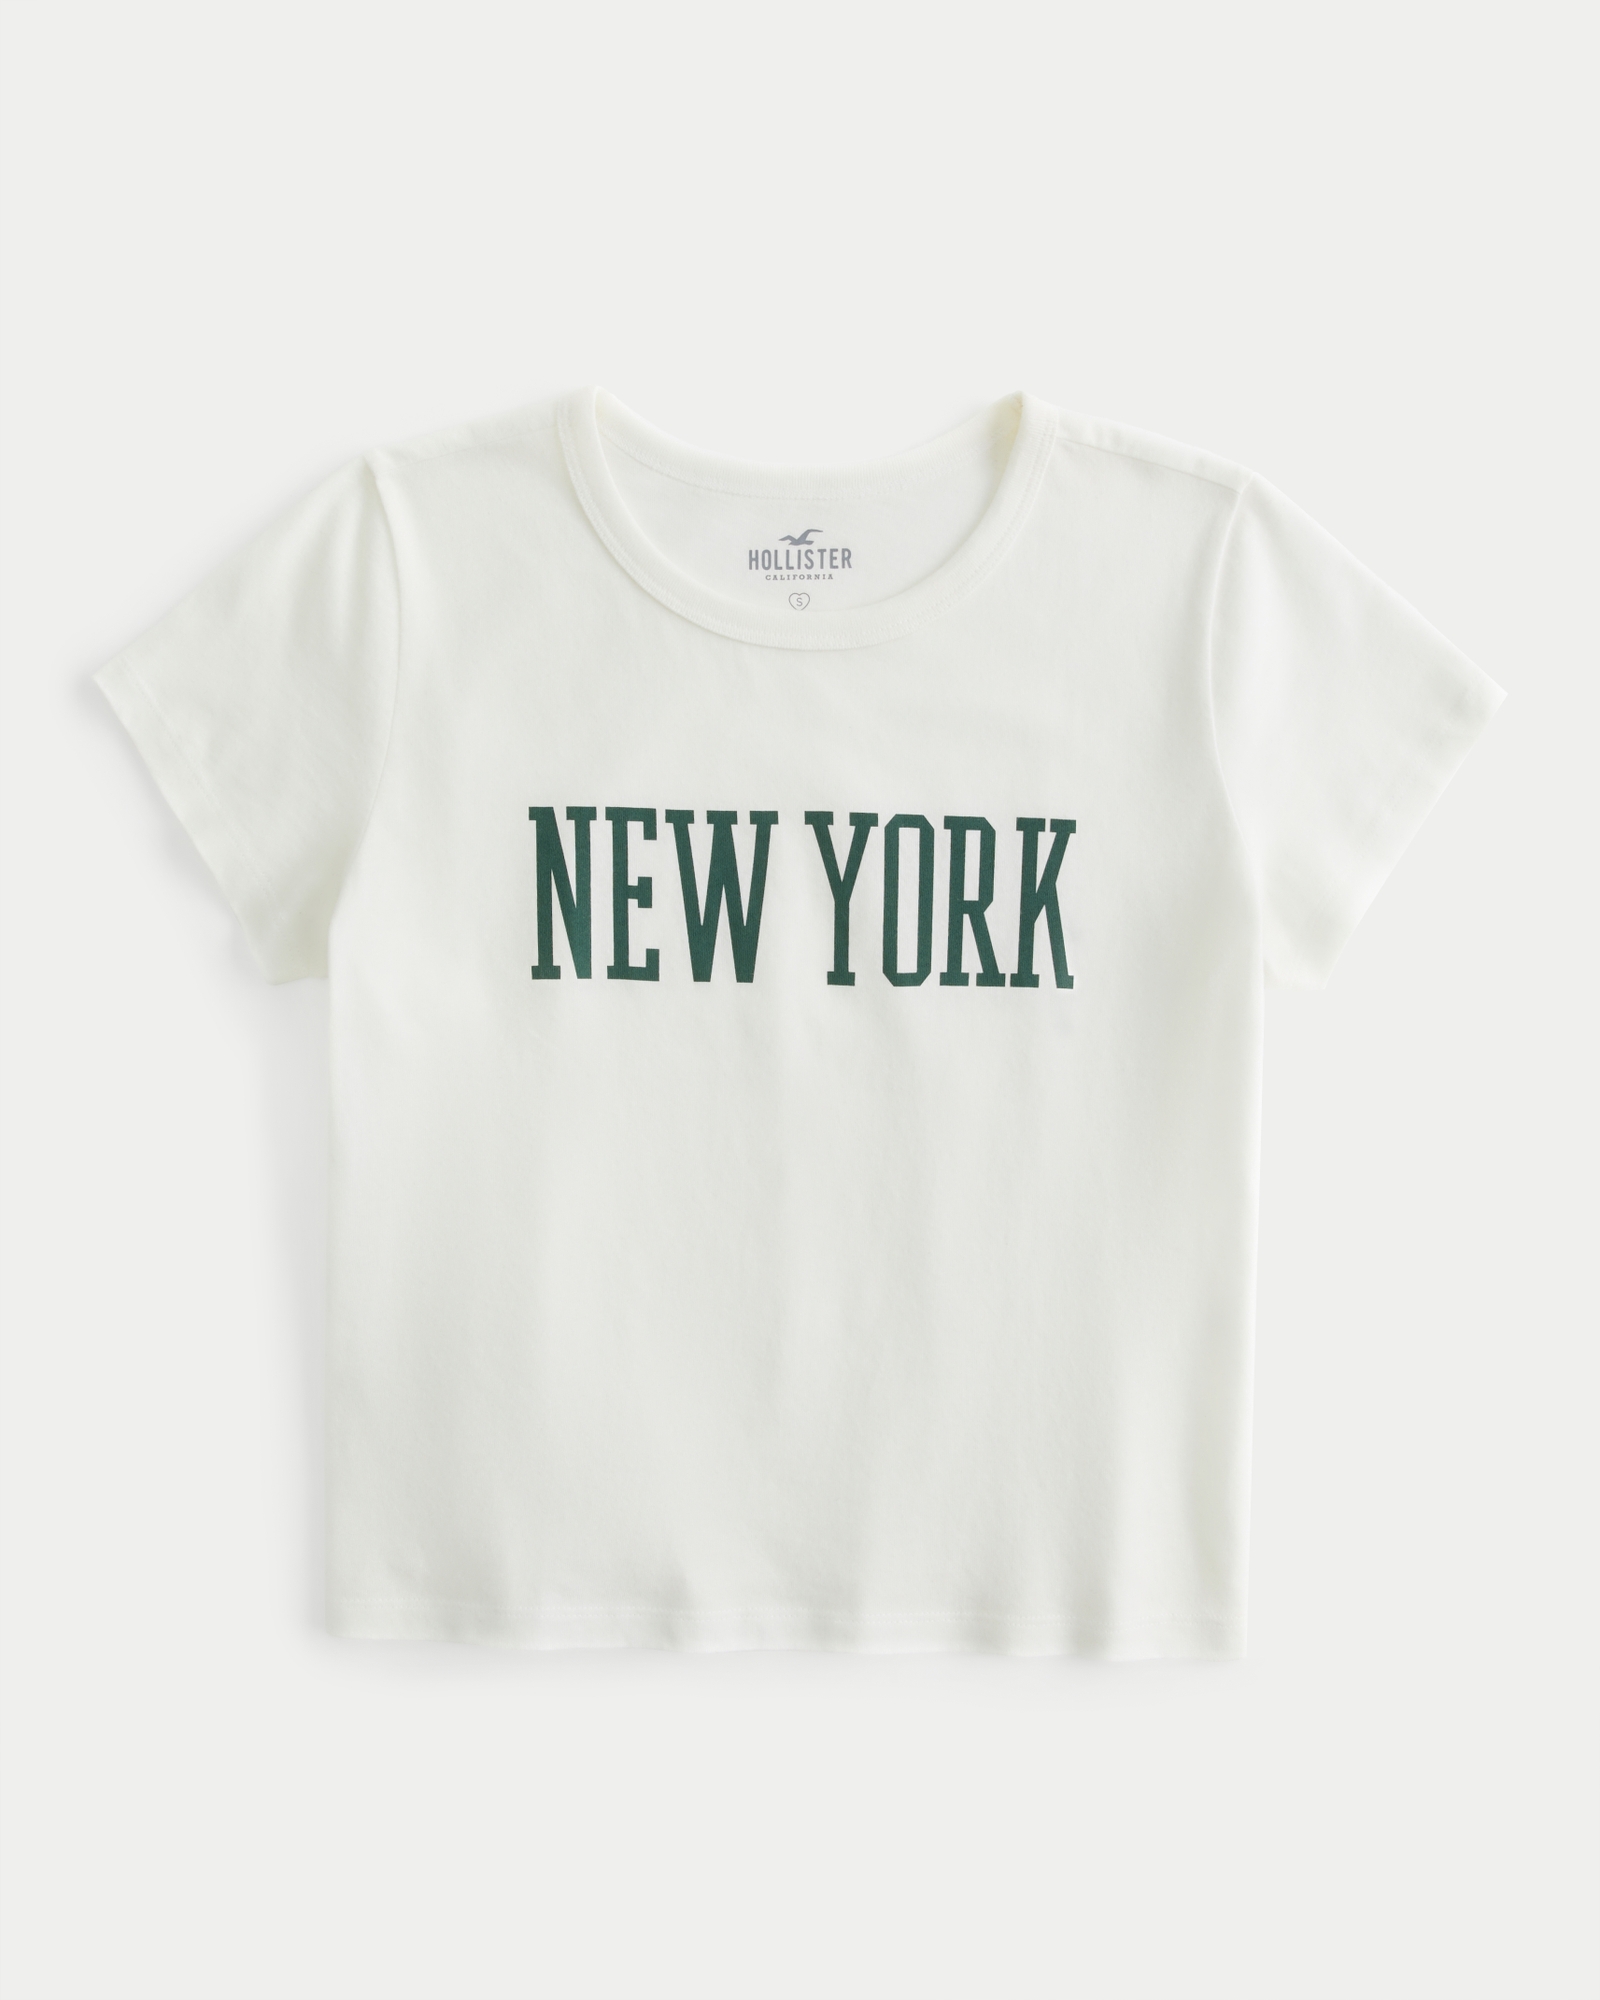 Women's Relaxed New York Graphic Baby Tee, Women's Tops